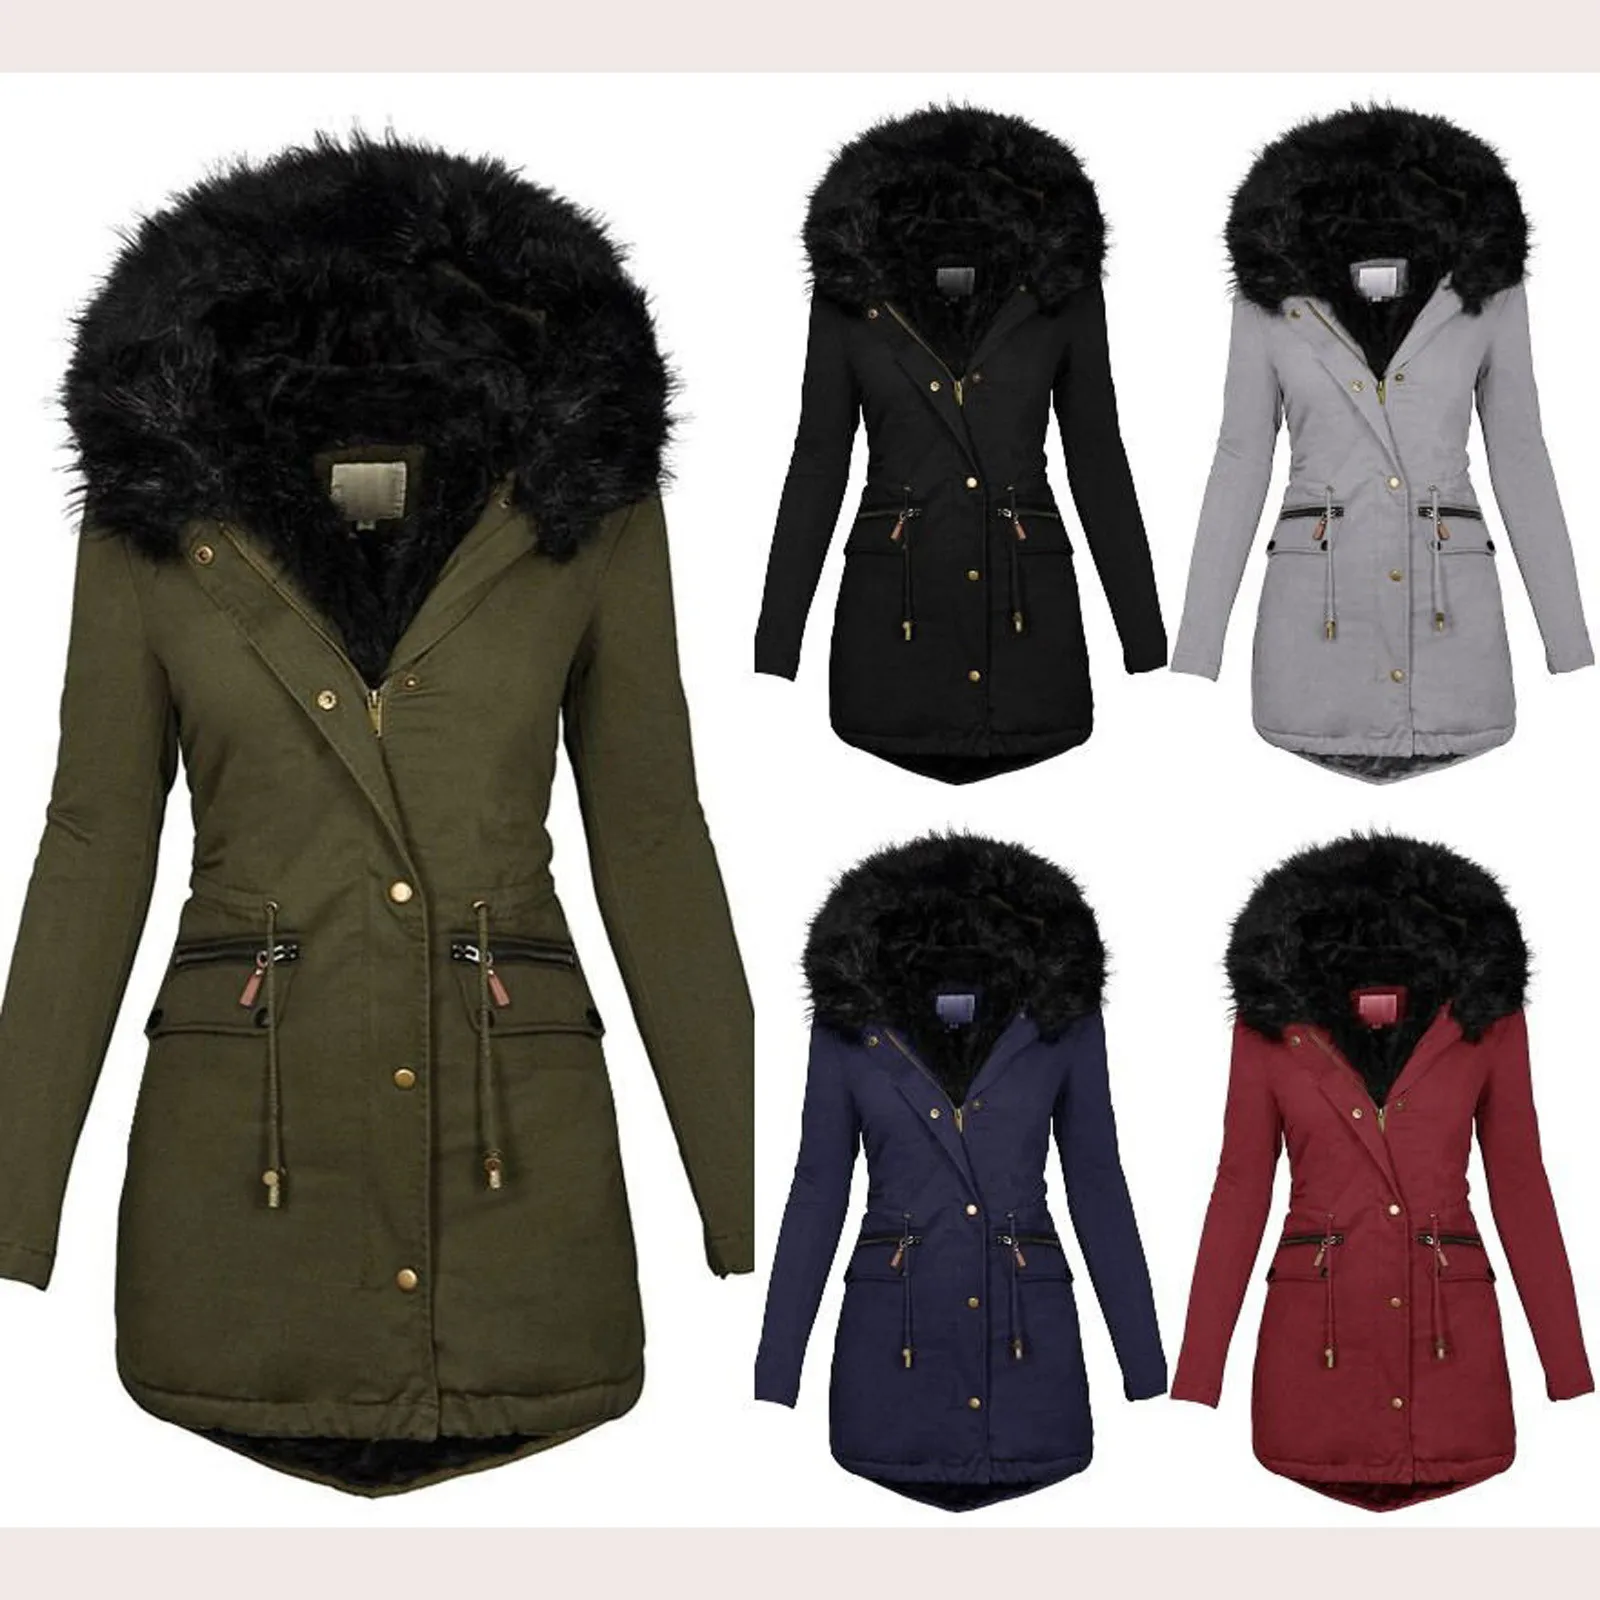 

2022 New Winter Warm Jacket Women Parka Fashion Long Coat Cotton Hooded Parkas Slim With Fur Collar Warm Snow Wear Padded Clothe